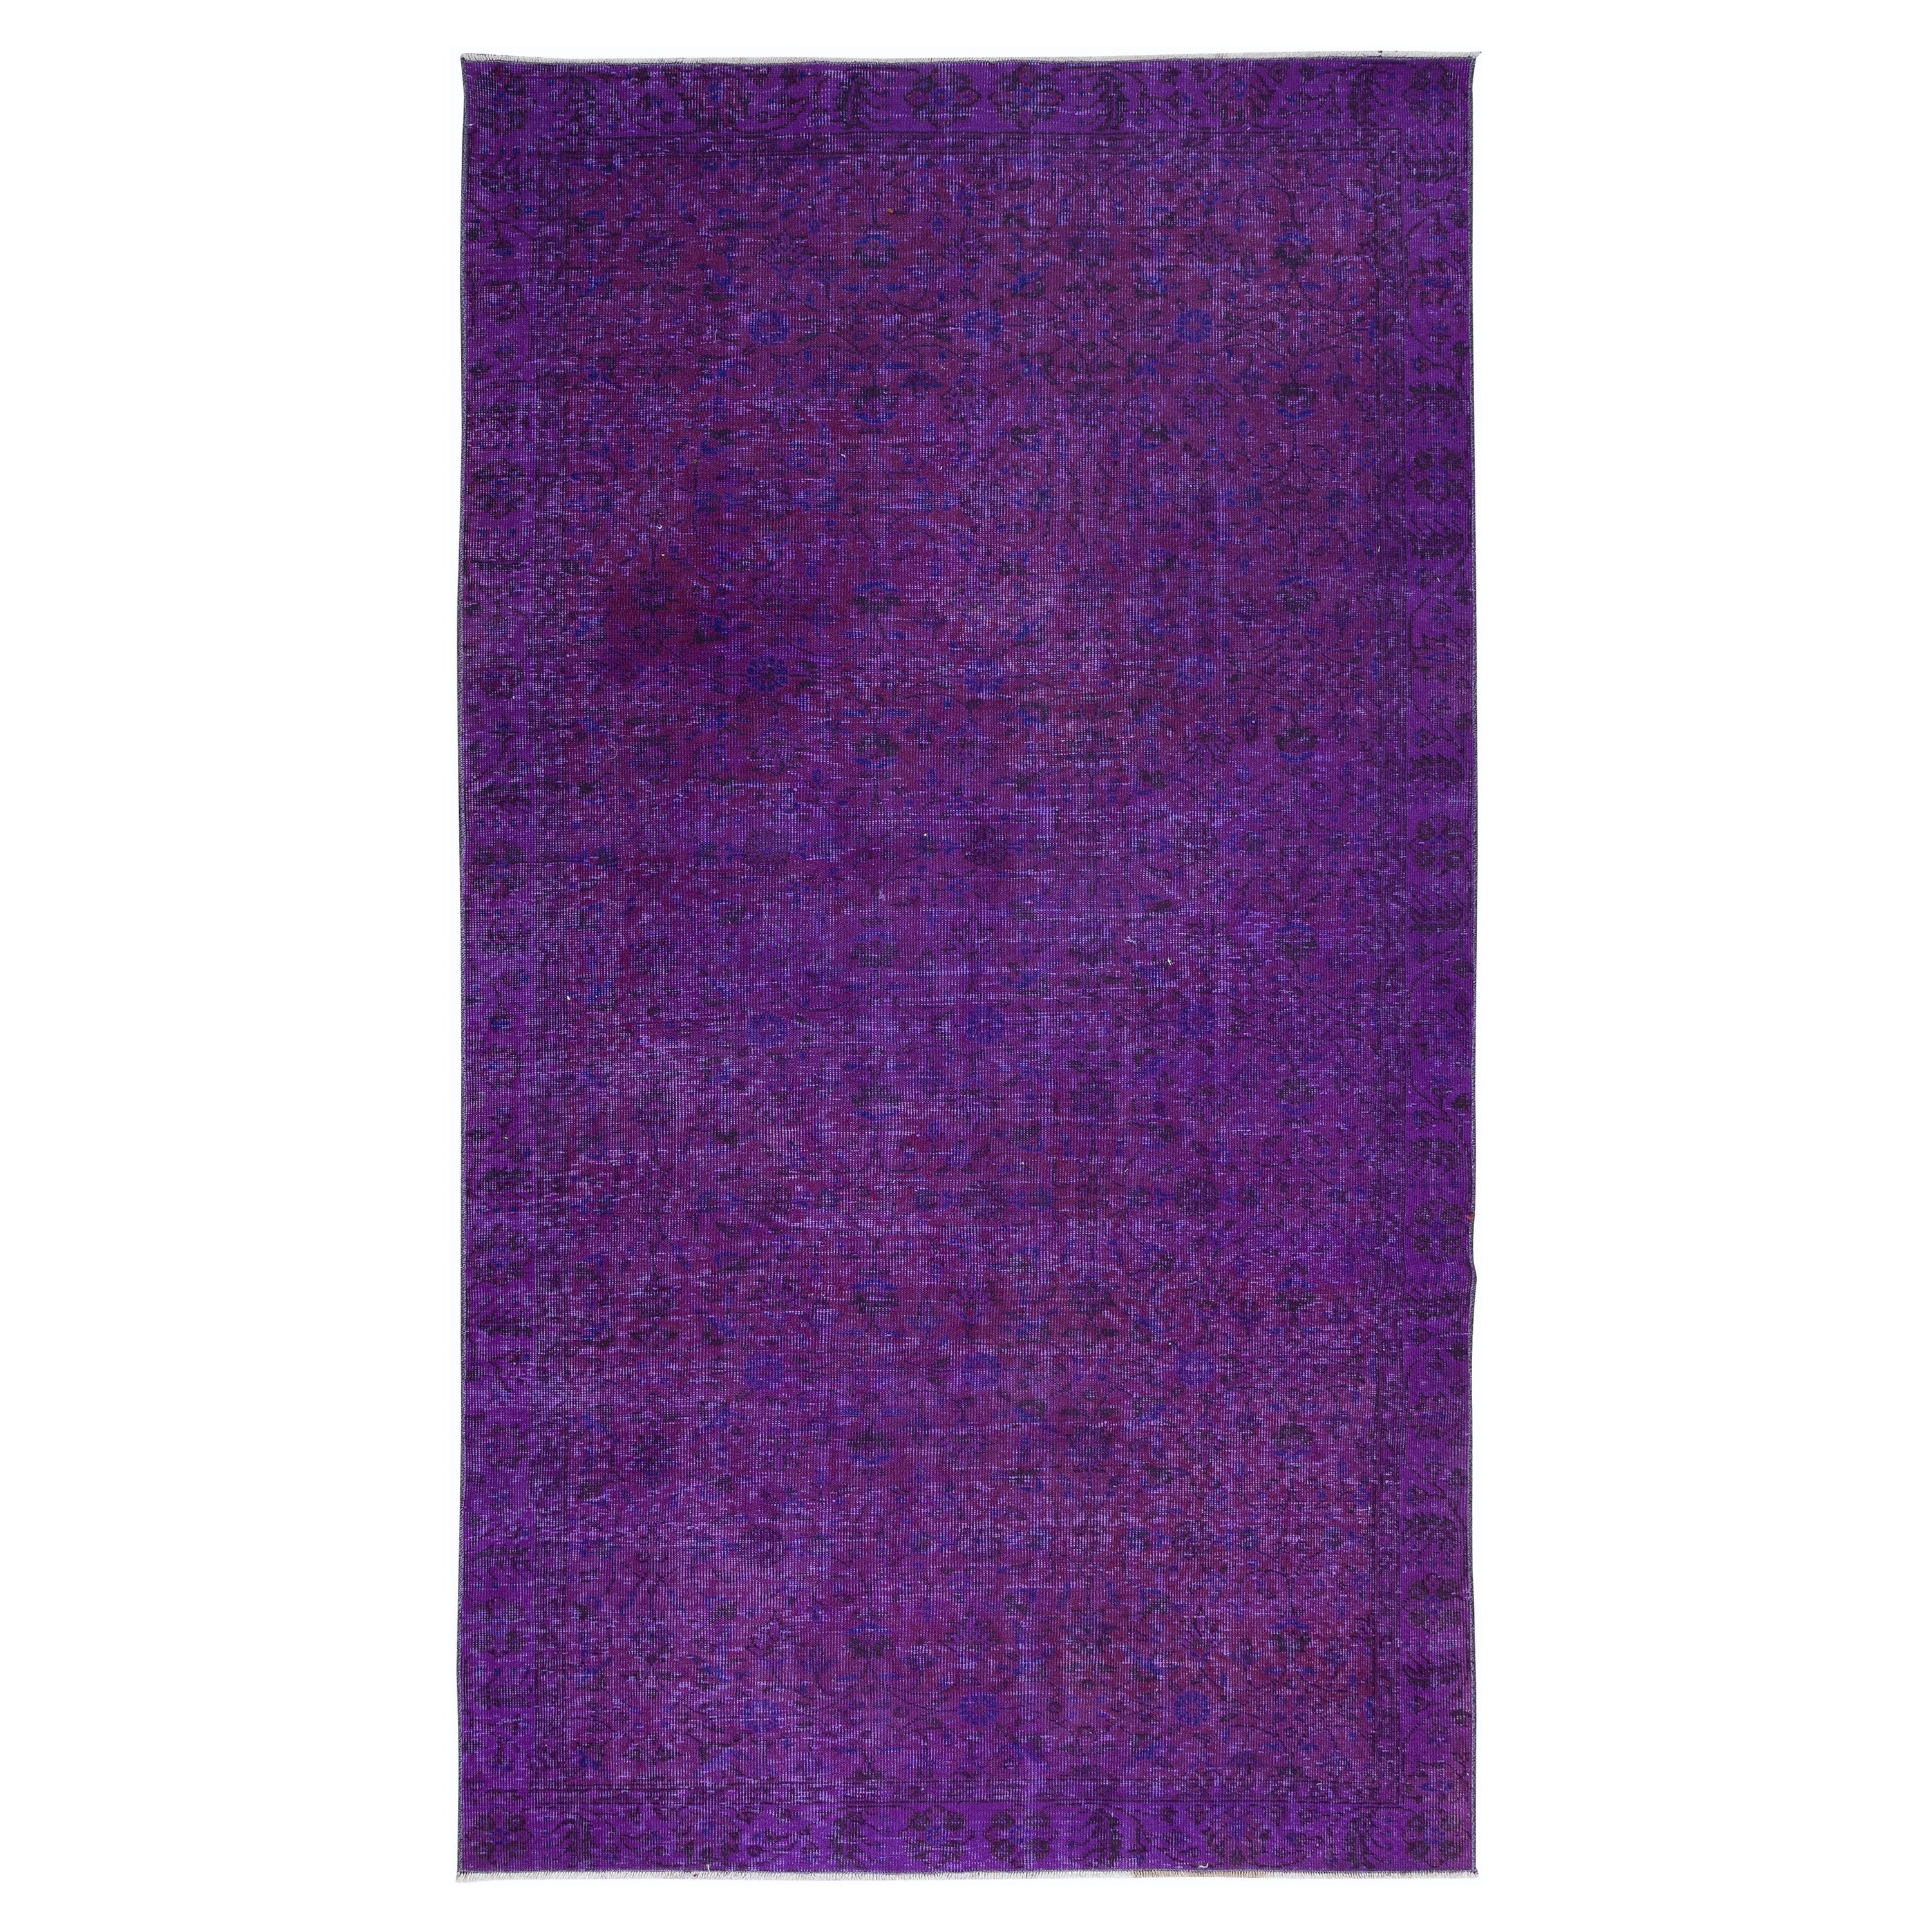 5.3x8.6 Ft Dark Purple Handmade Room Size Area Rug. Modern Floral Turkish Carpet For Sale